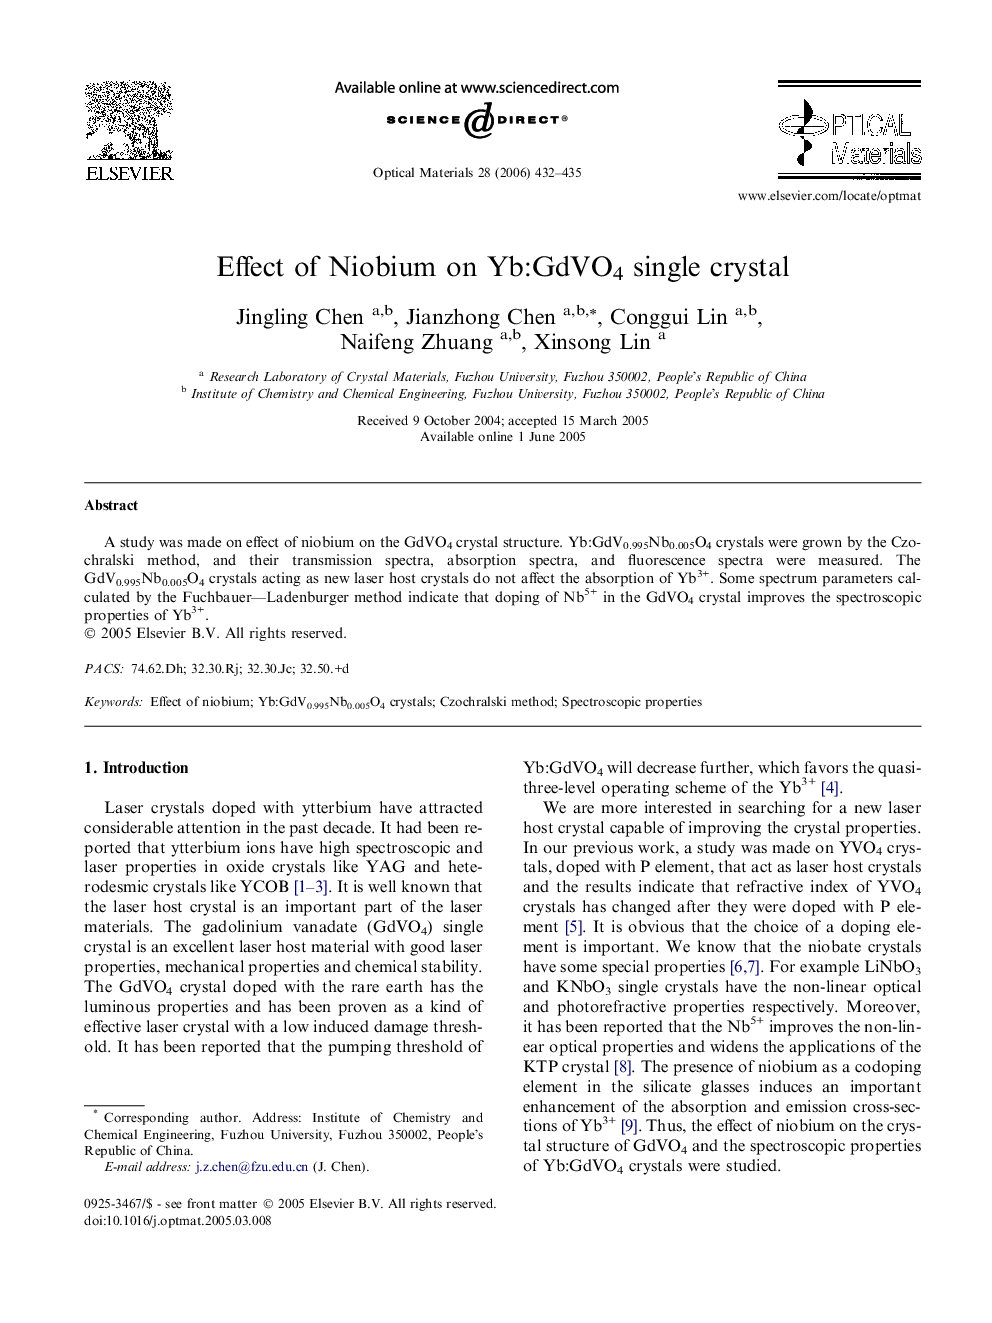 Effect of Niobium on Yb:GdVO4 single crystal